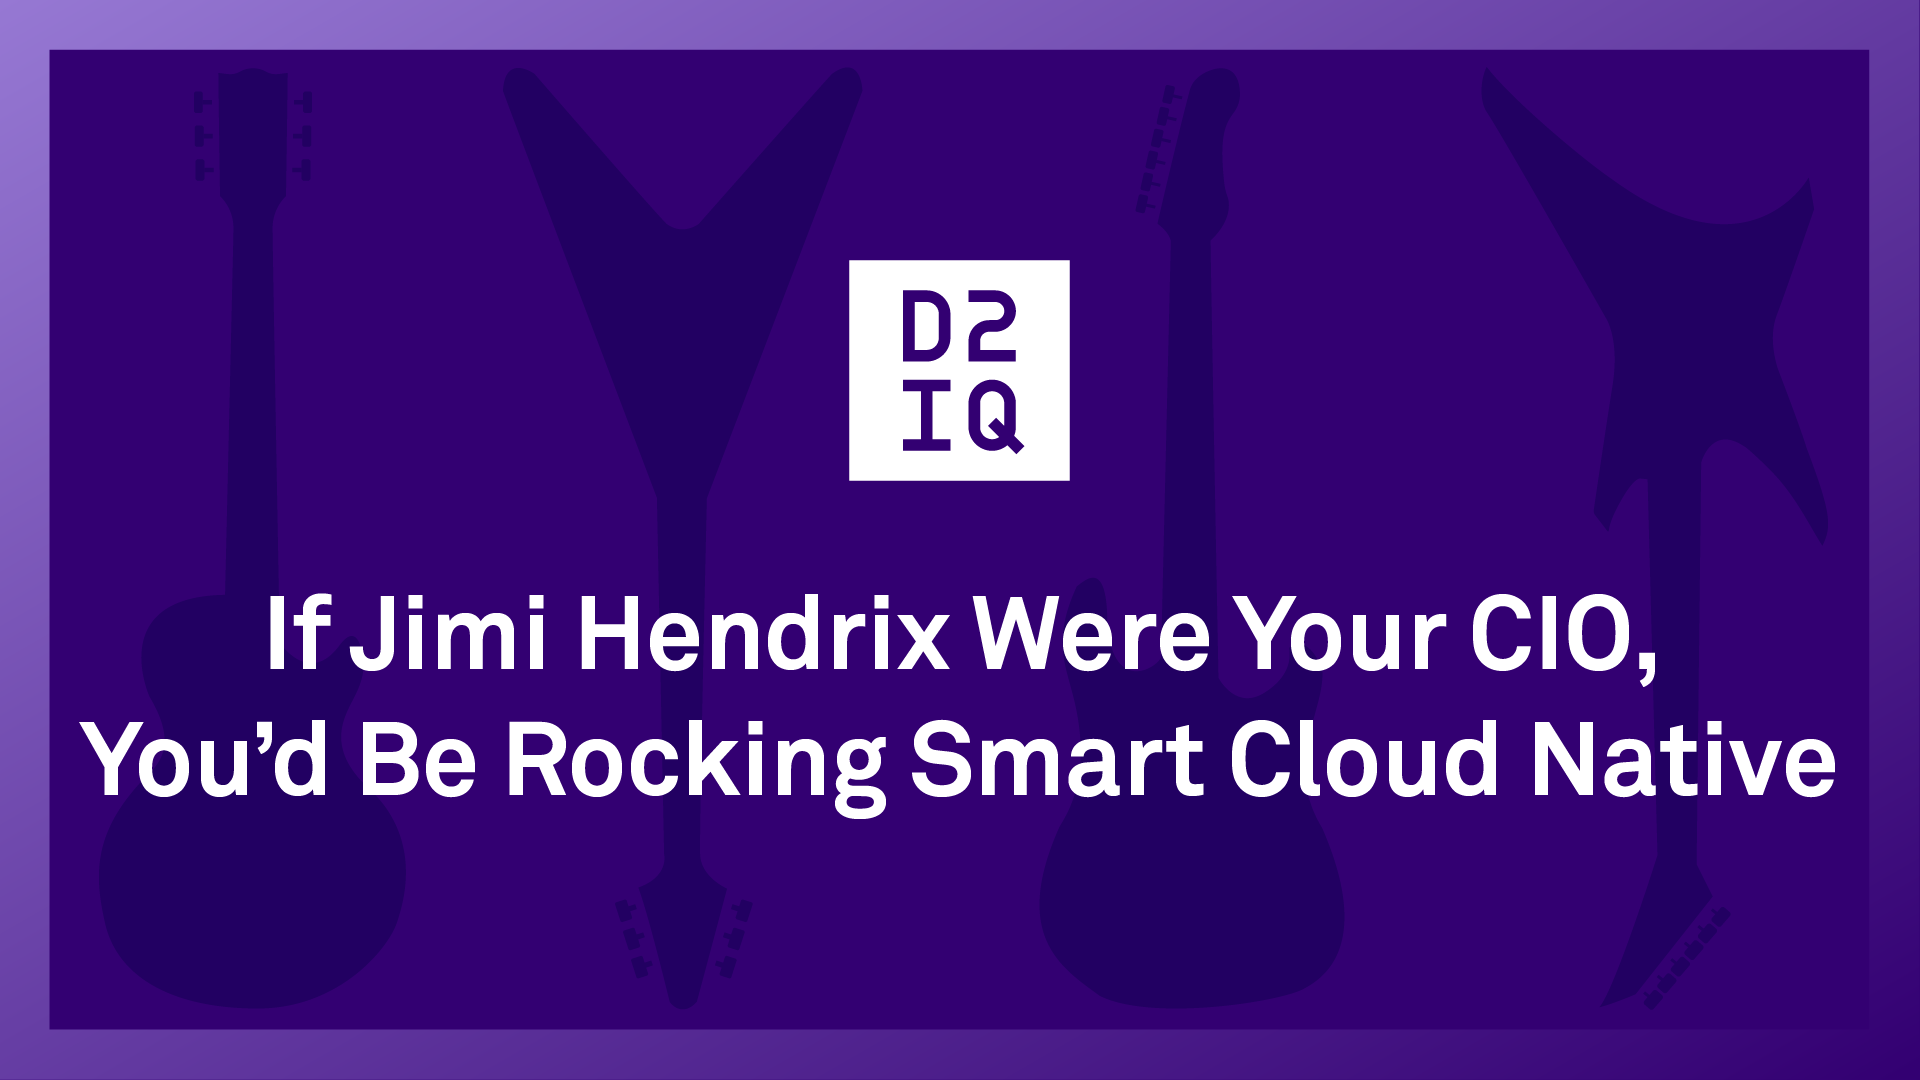 If Jimi Hendrix Were Your CIO, You’d Be Rocking Smart Cloud Native